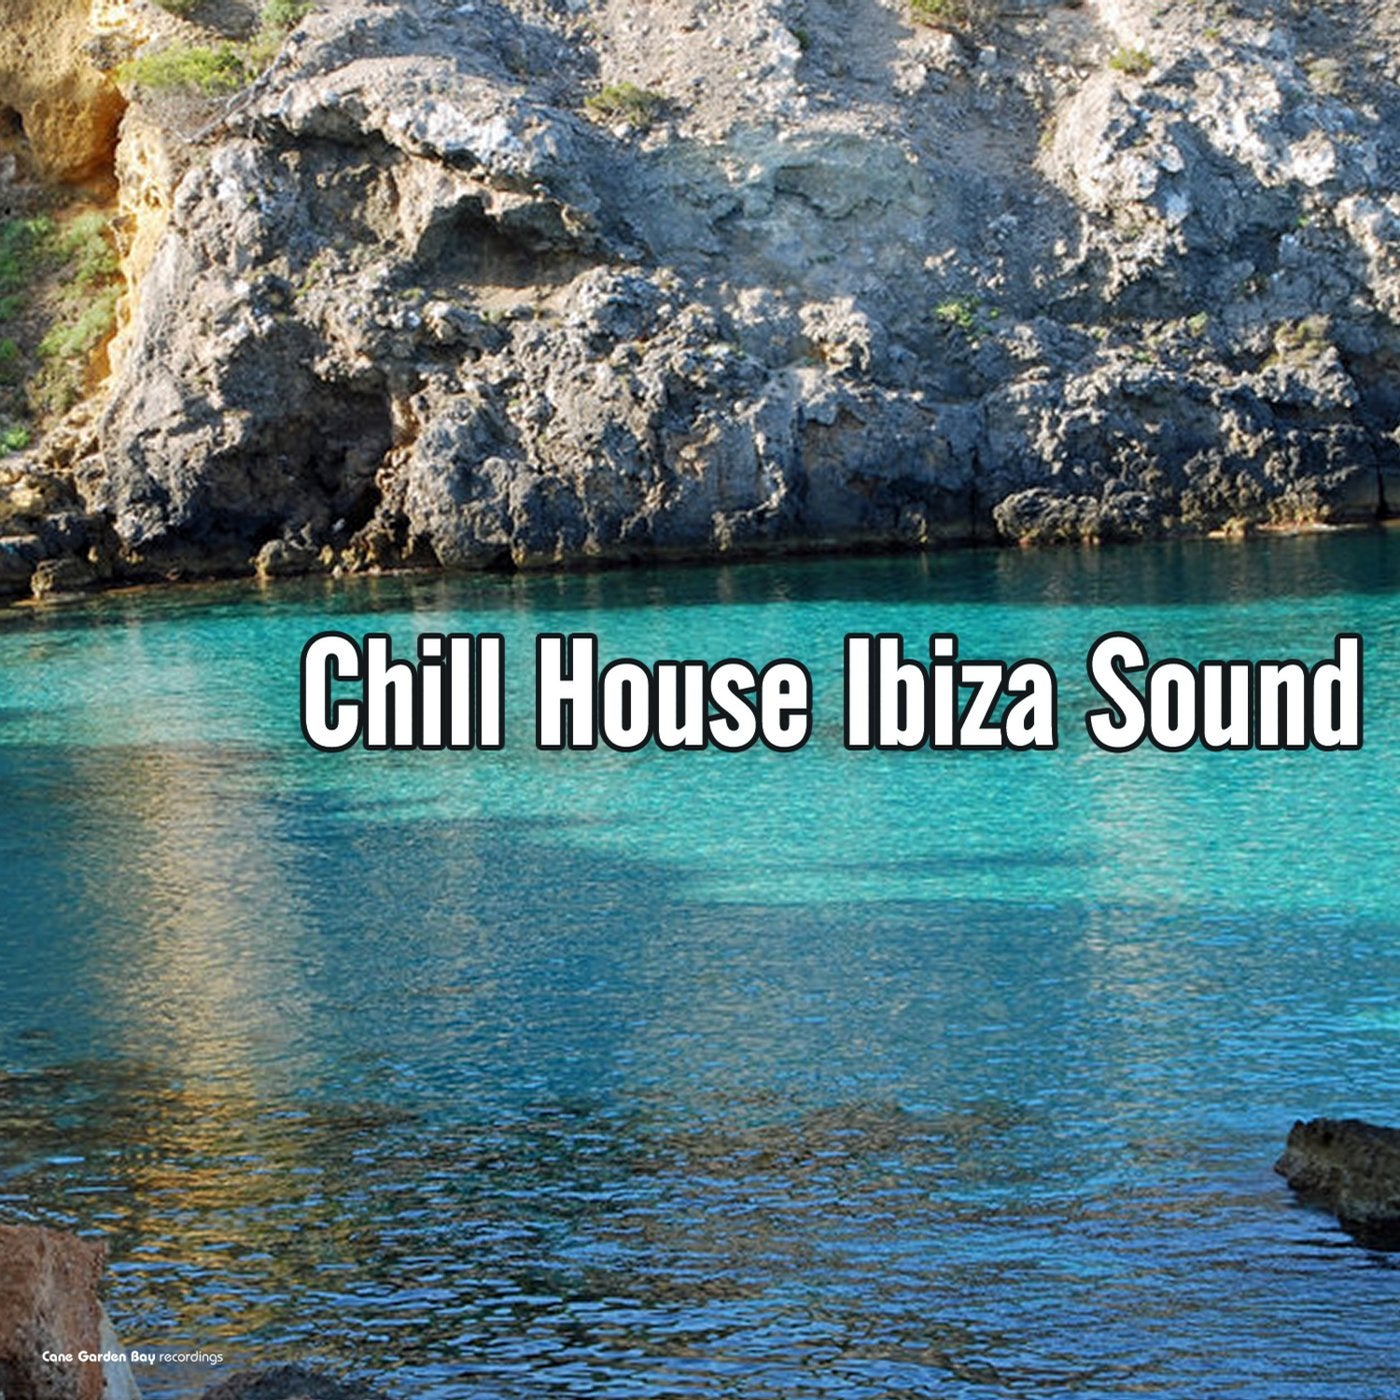 Chill House Ibiza Sound